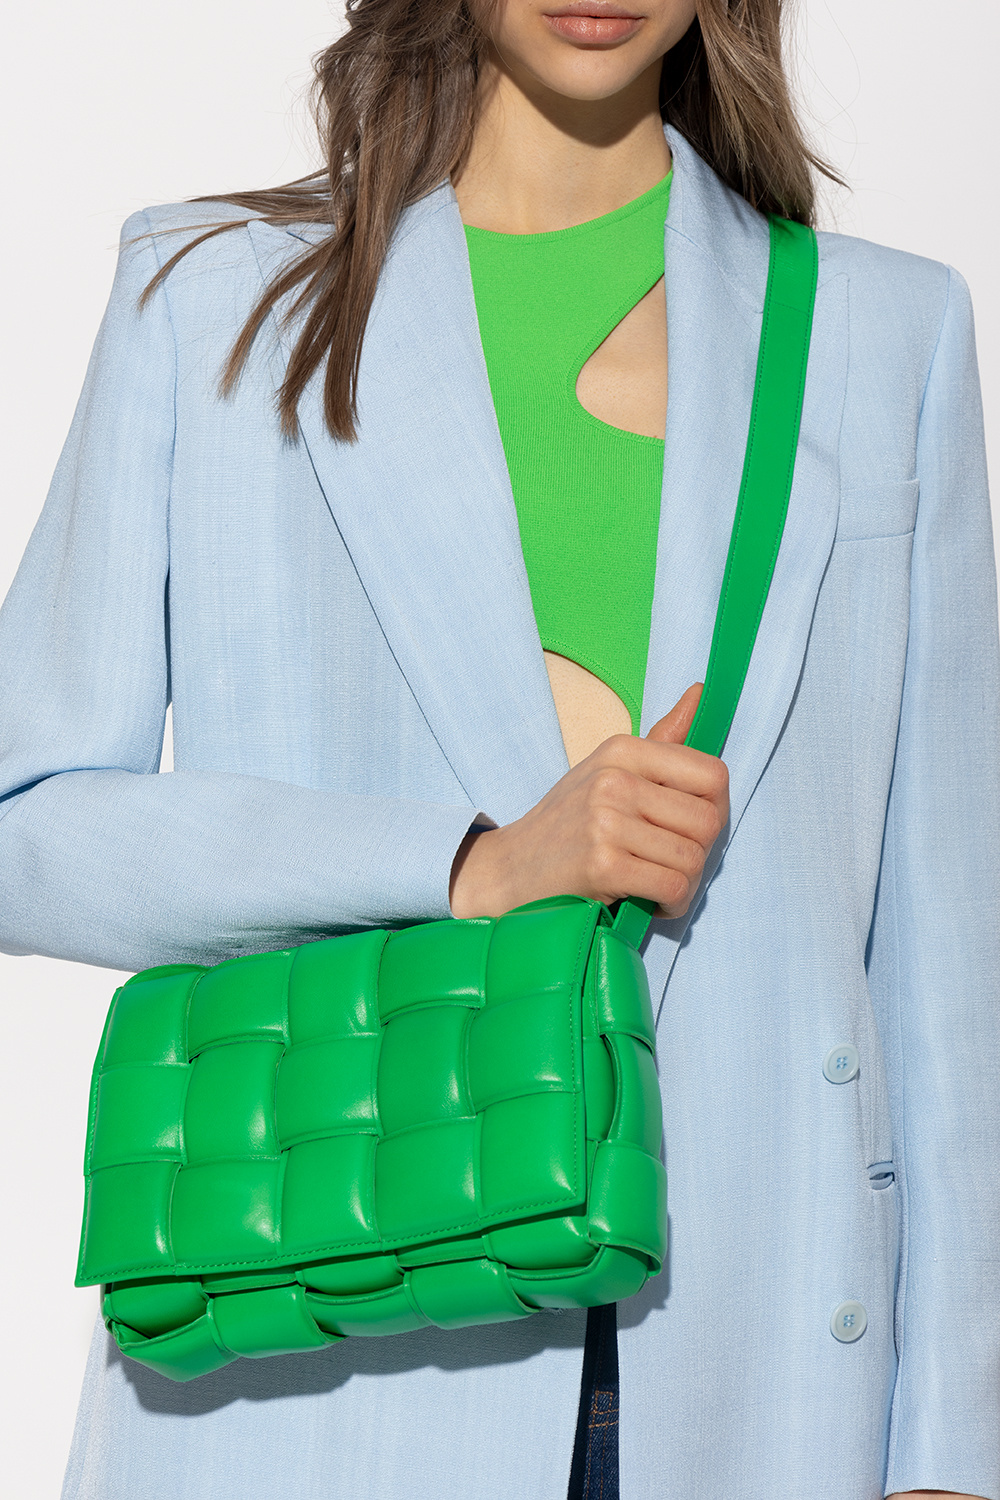 IetpShops, marie bottega veneta cropped jeansoberteil mit v ausschnitt  item, Women's Bags